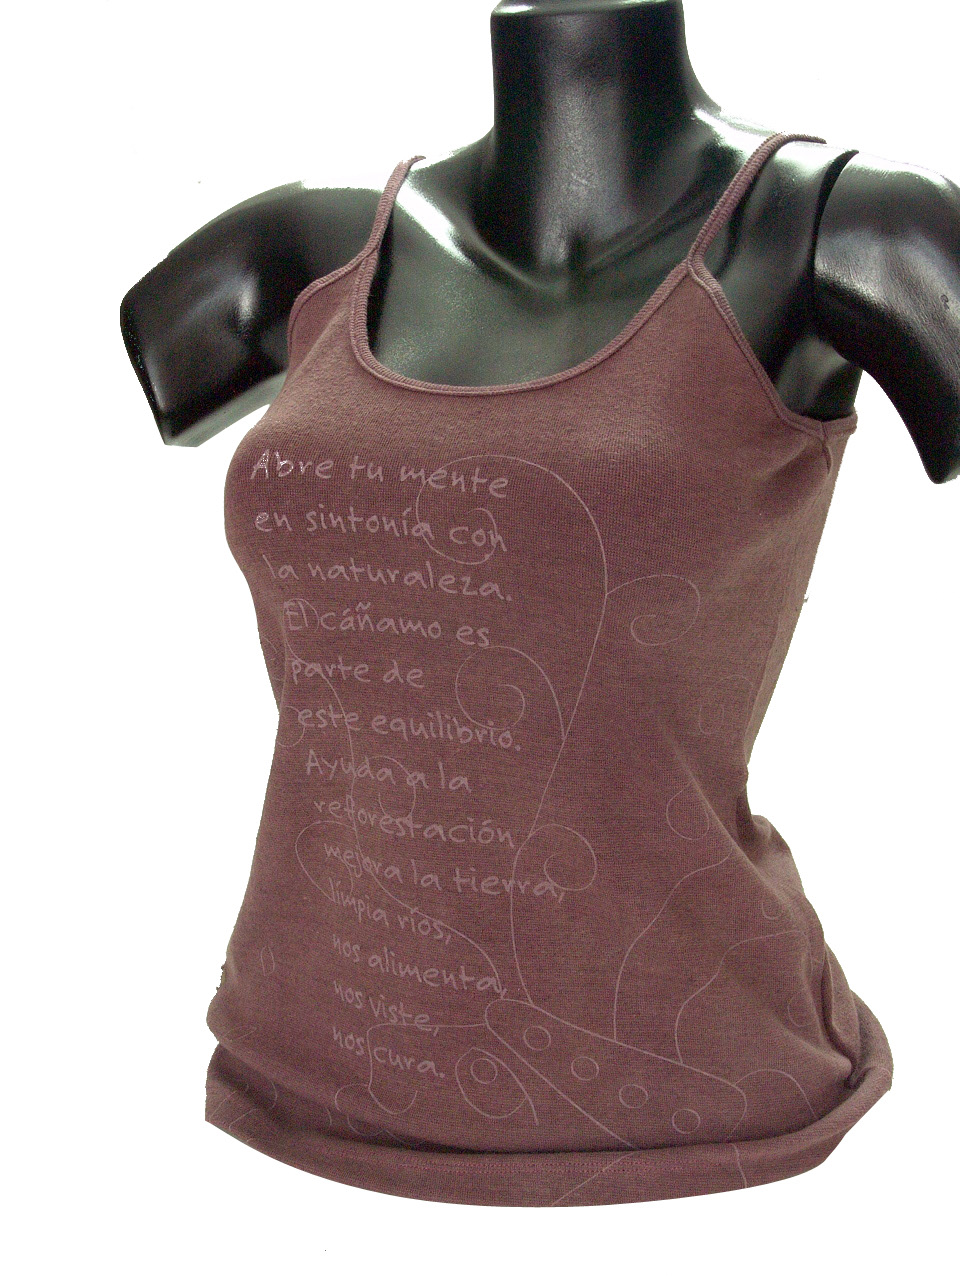 hemp women clothes t-shirt tank top top organic jacket Yoga eco natural Natural Dye